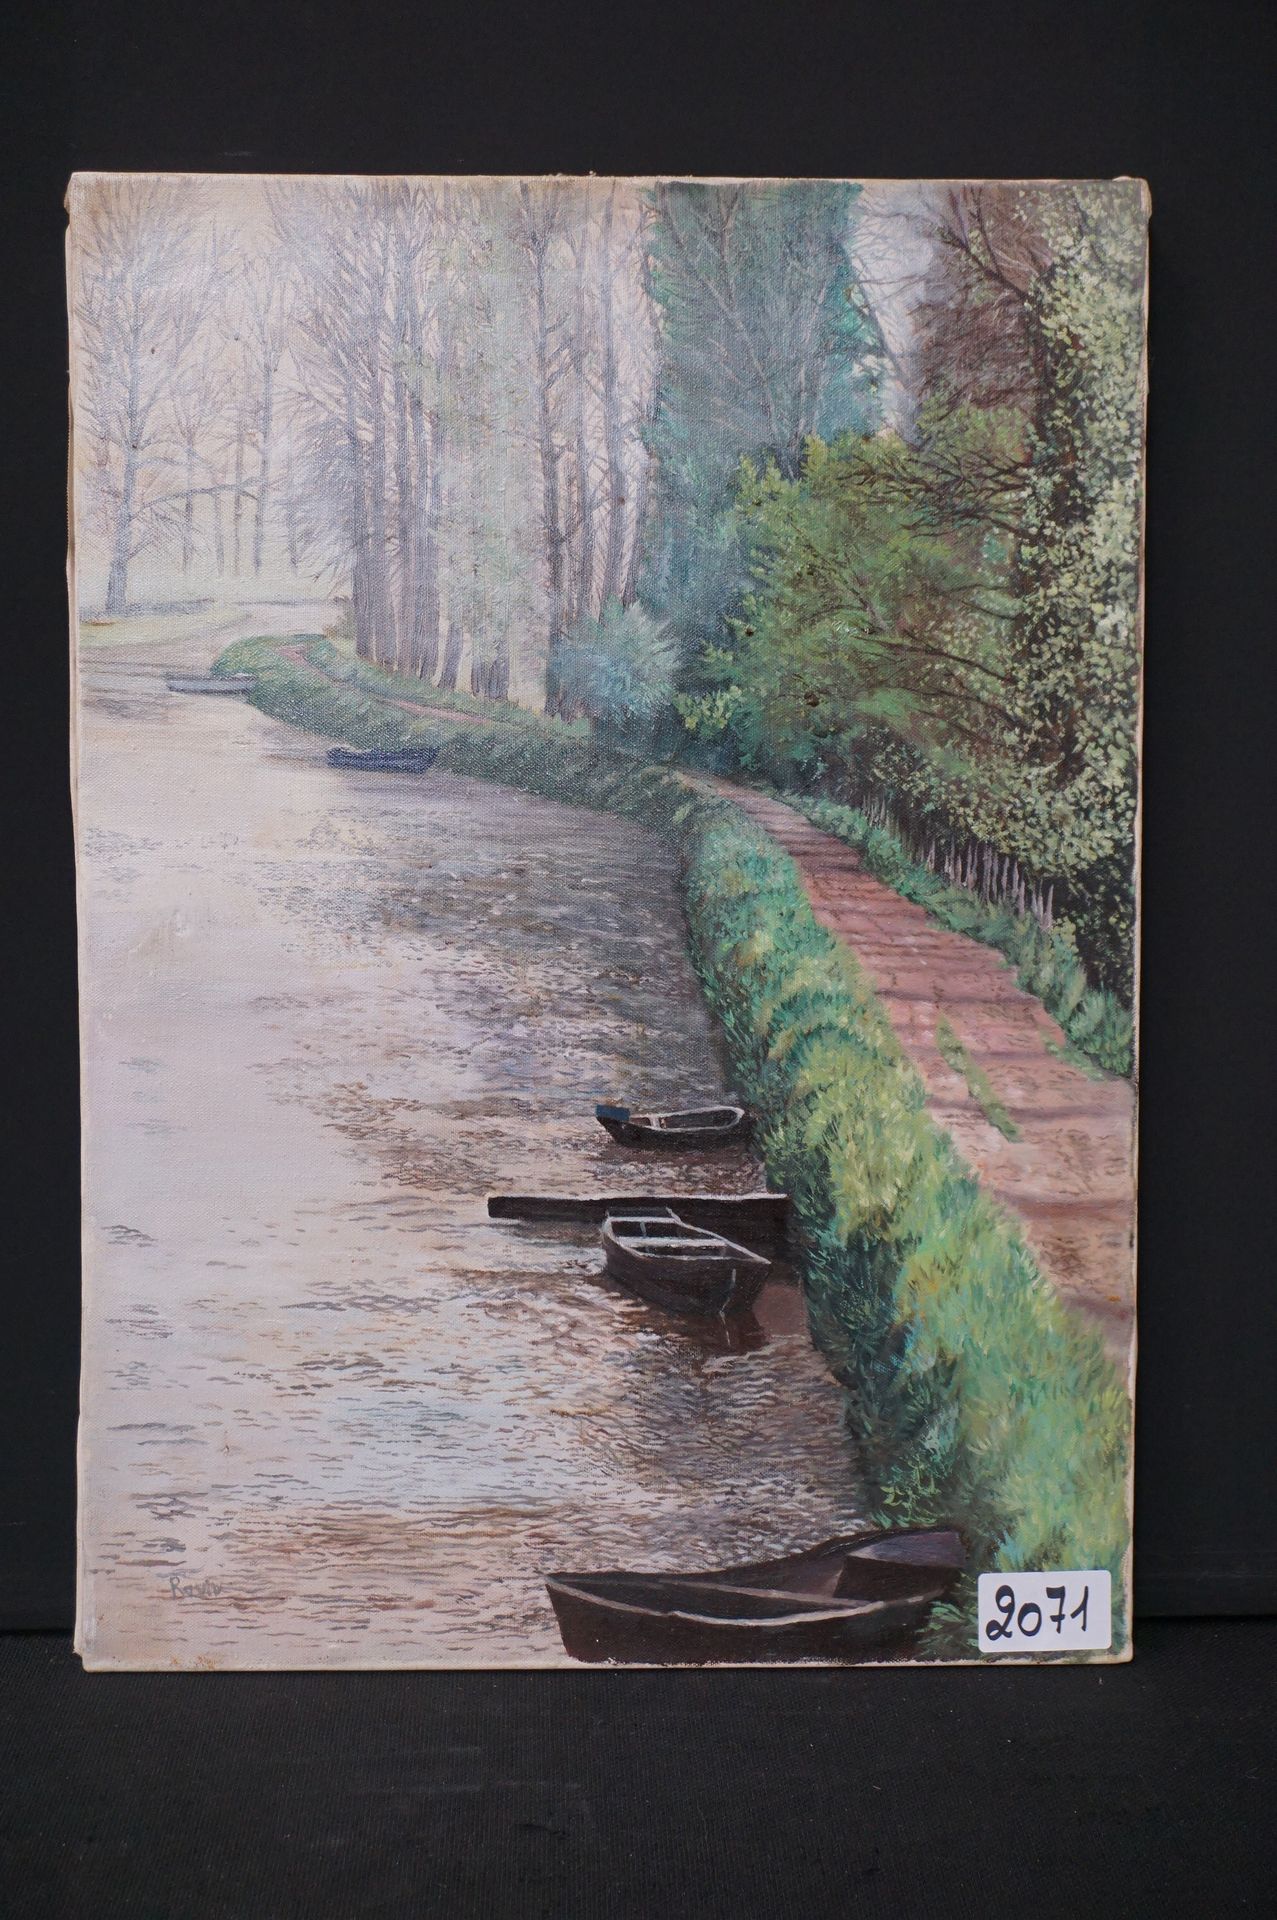 YANON DAVID "Boats on the shore" - Oil on canvas - Signed - 70 x 50 cm